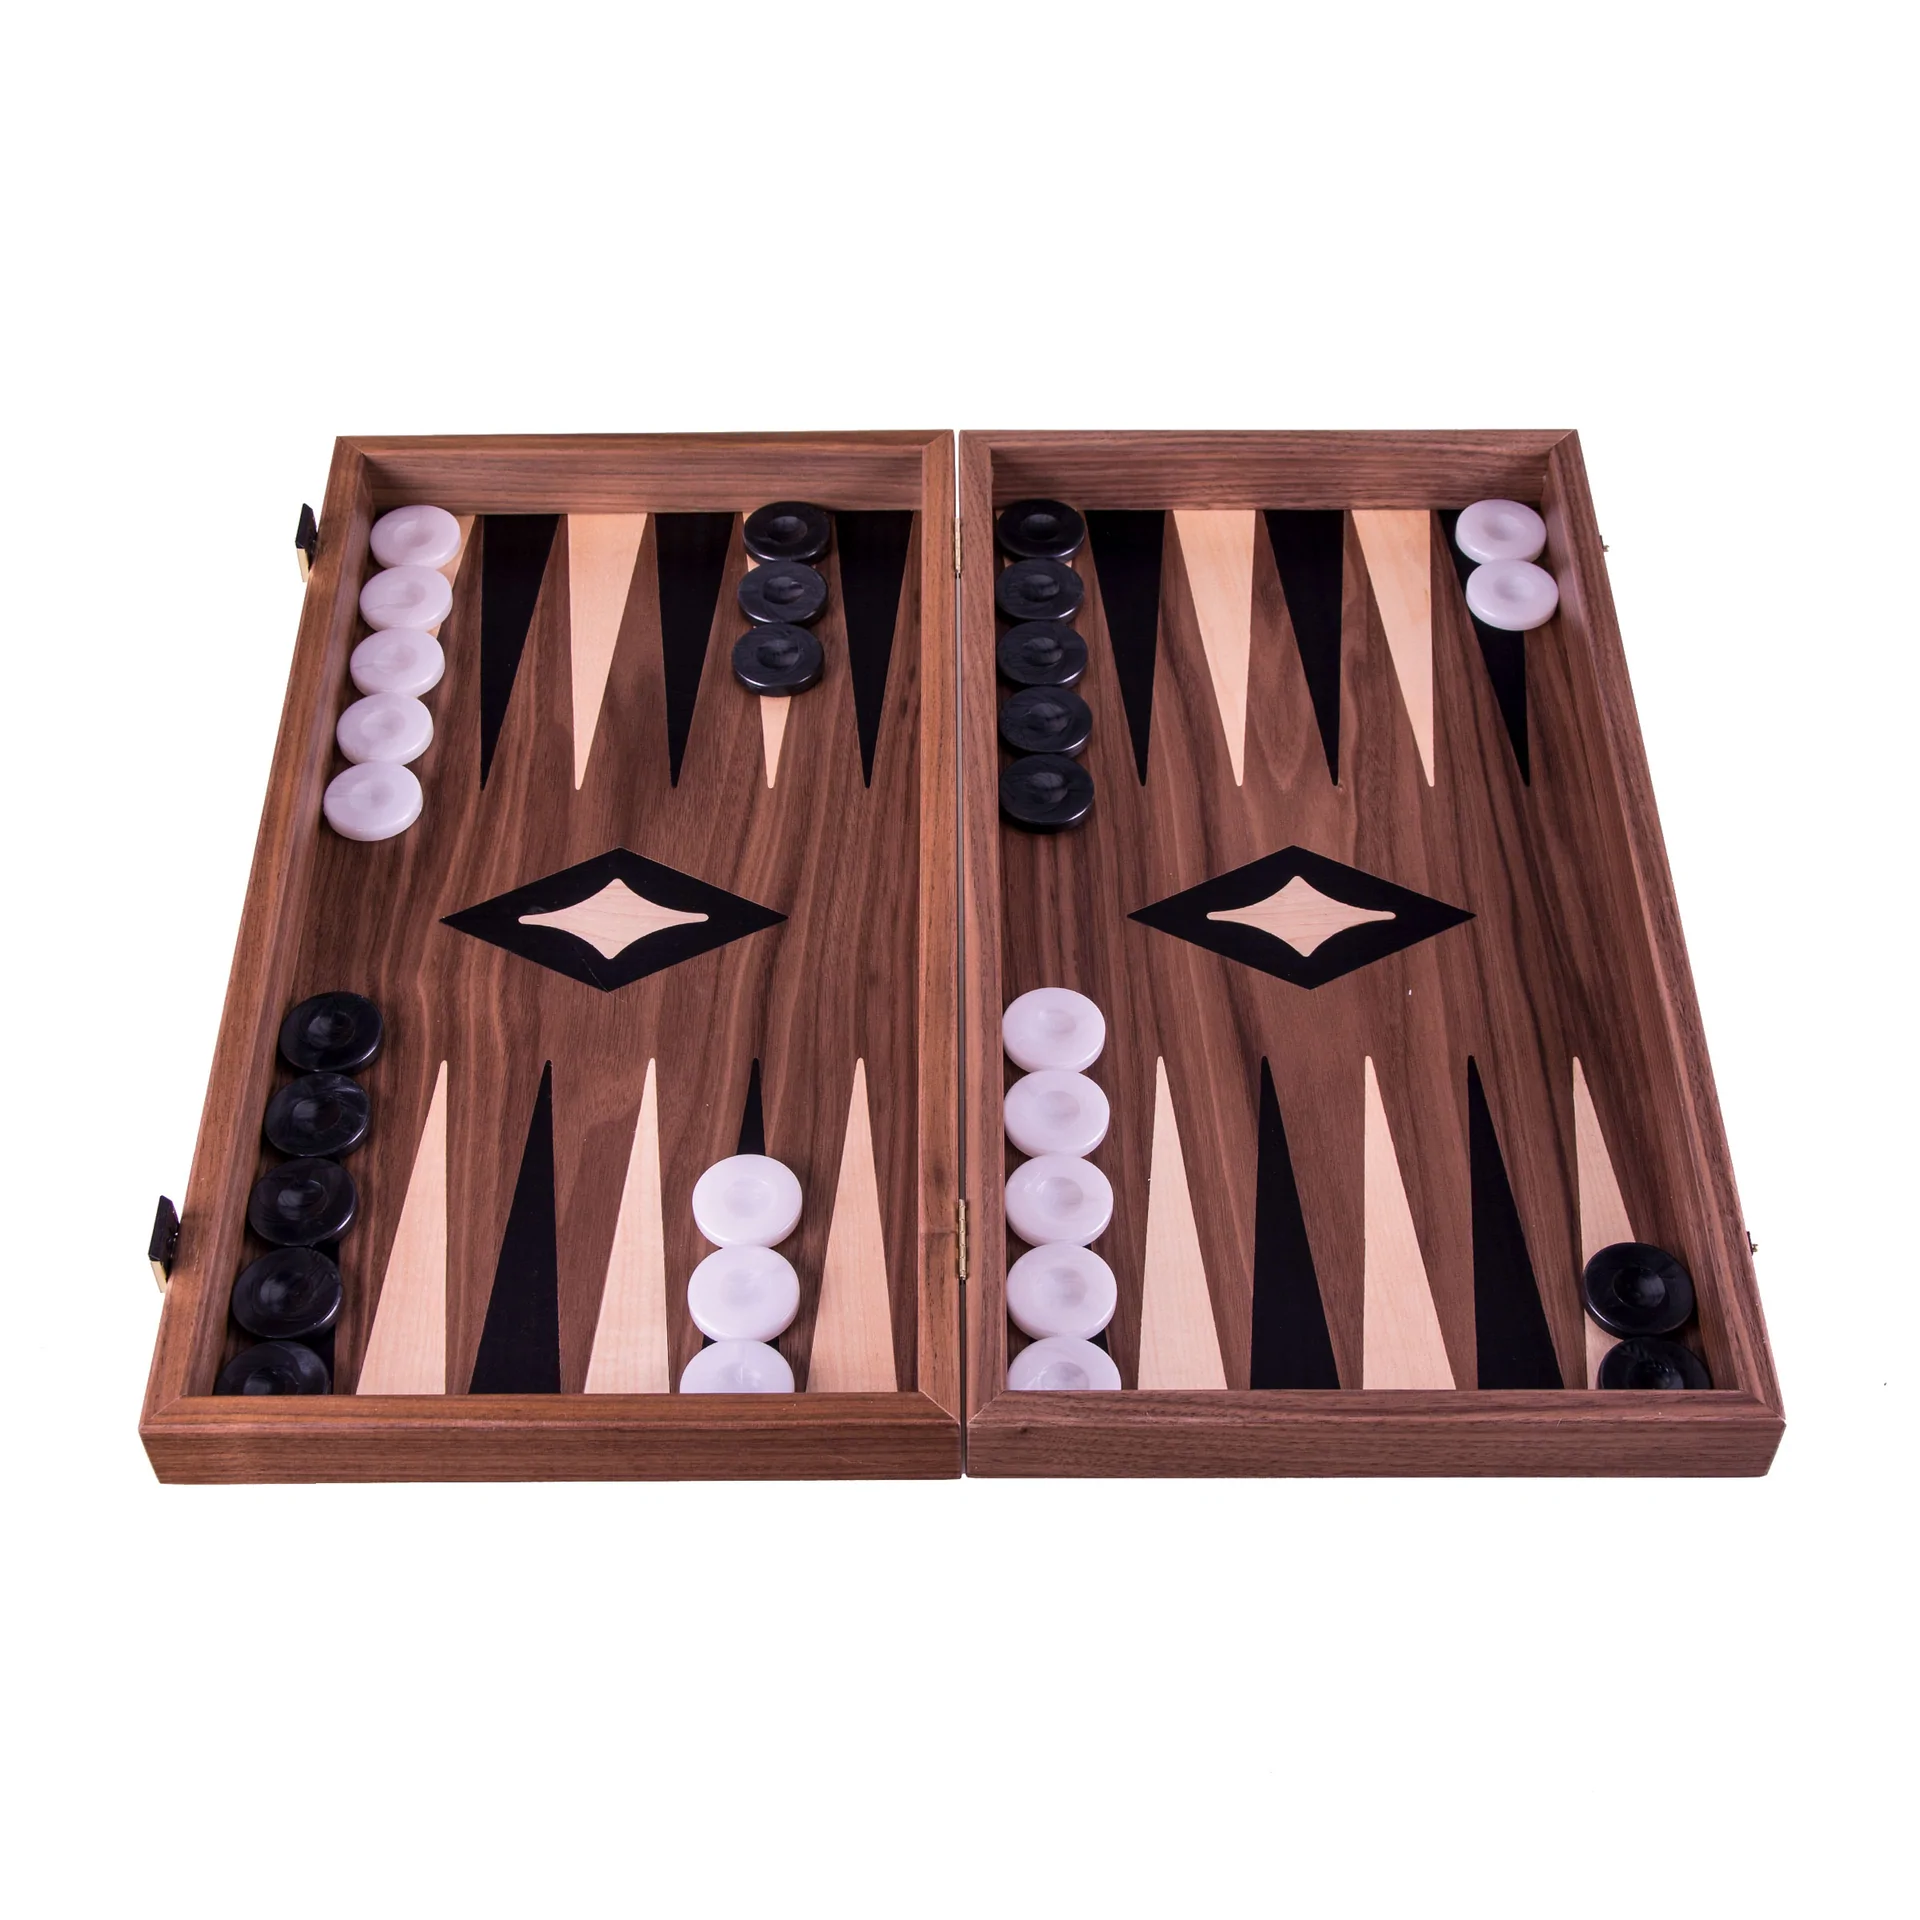 3 in 1 Schaak/Backgammon/Dam Bord Medium